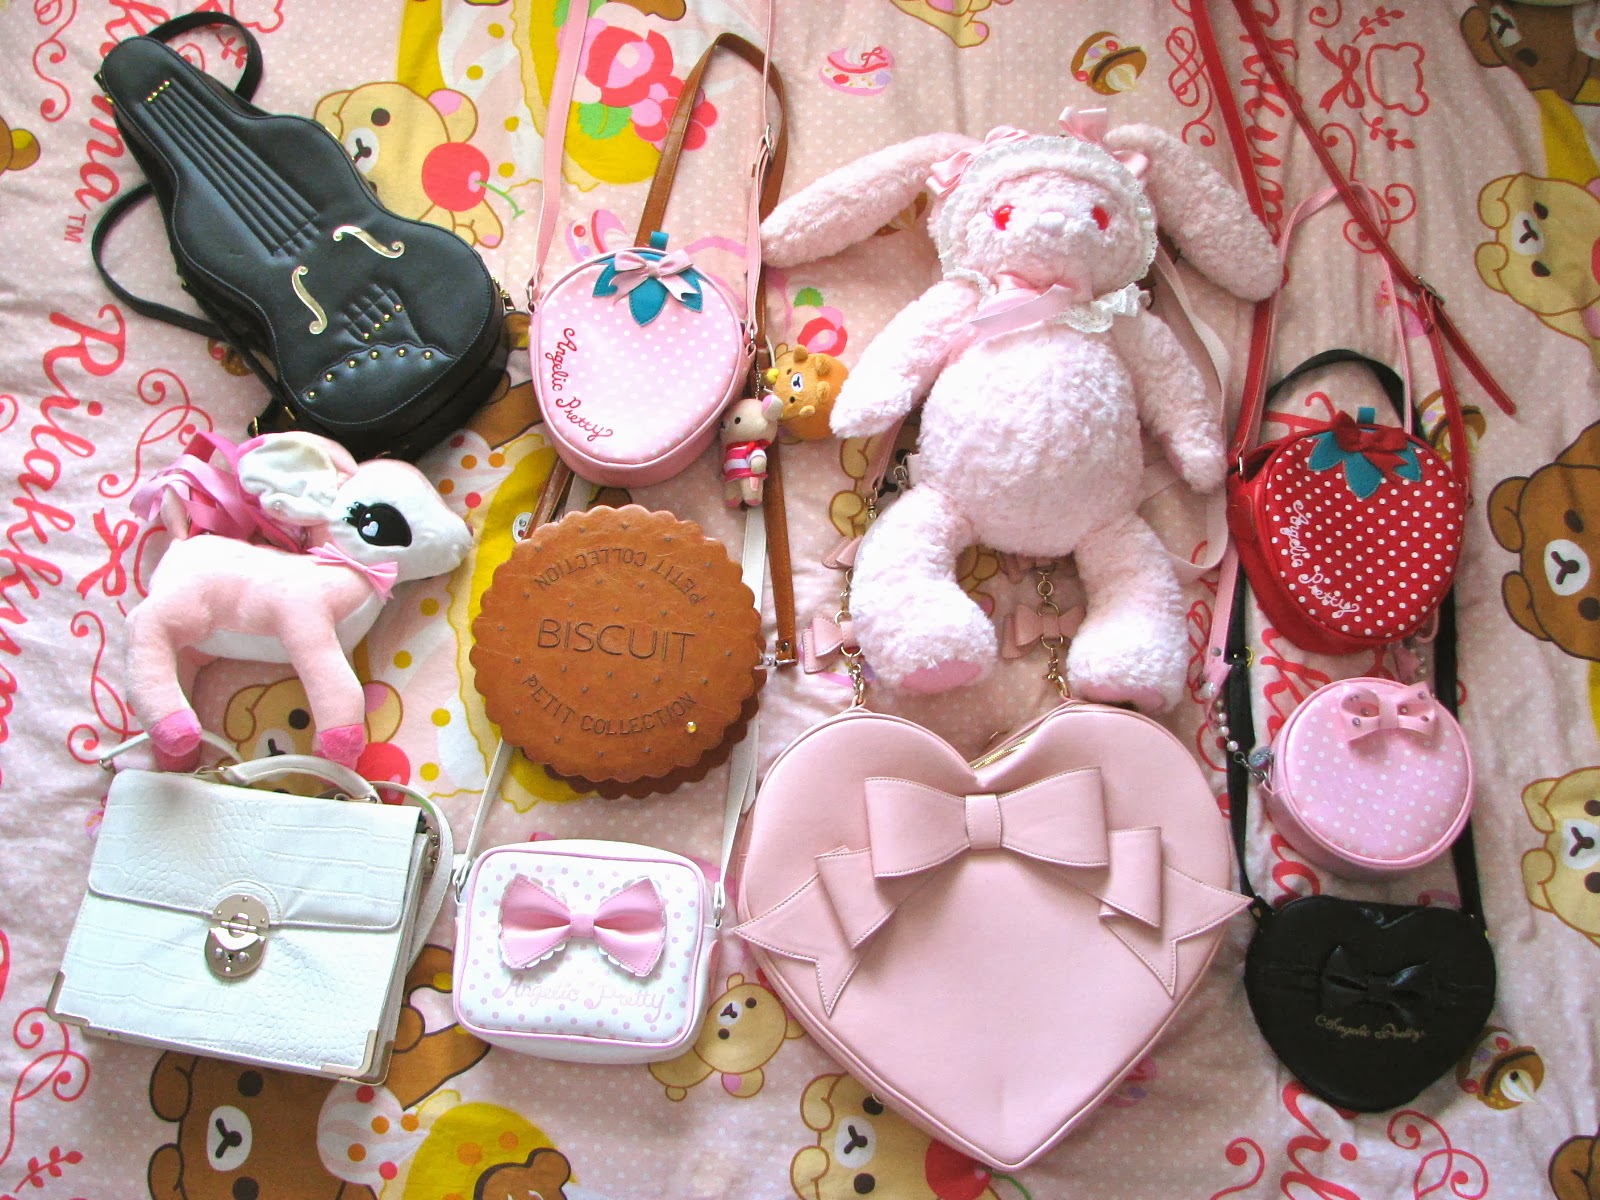 Milkyfawn: A lolita blog.: Current wardrobe post - picture heavy!